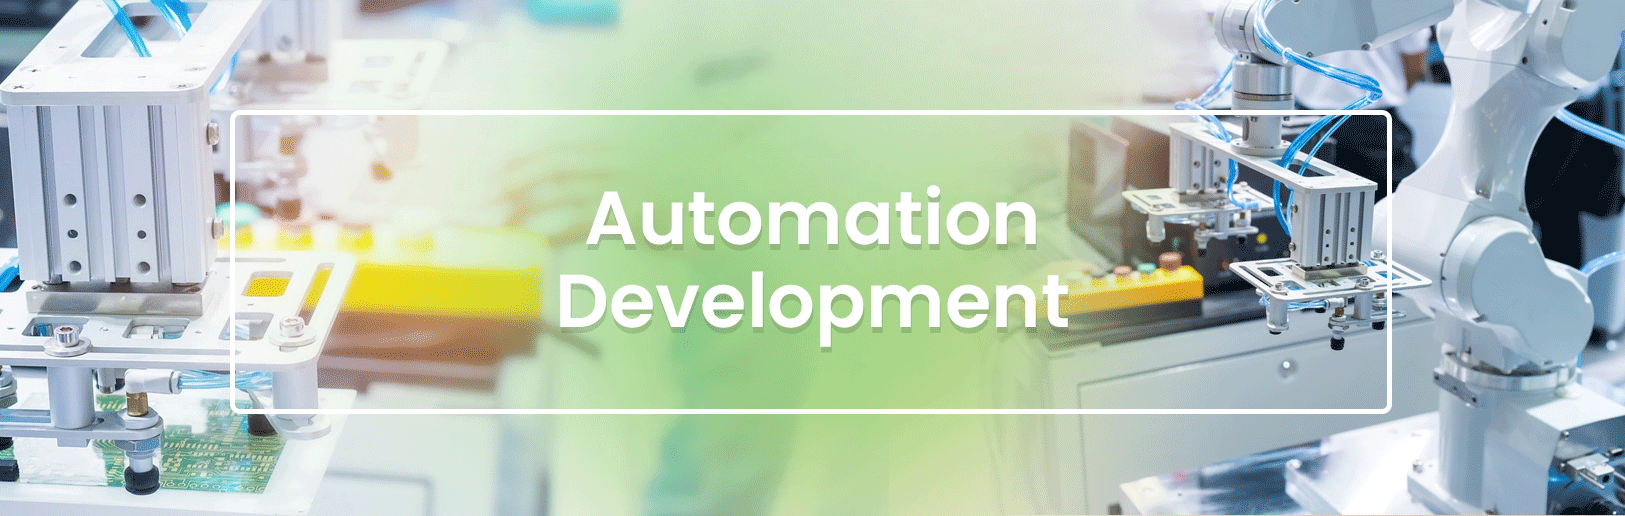 Automation Development